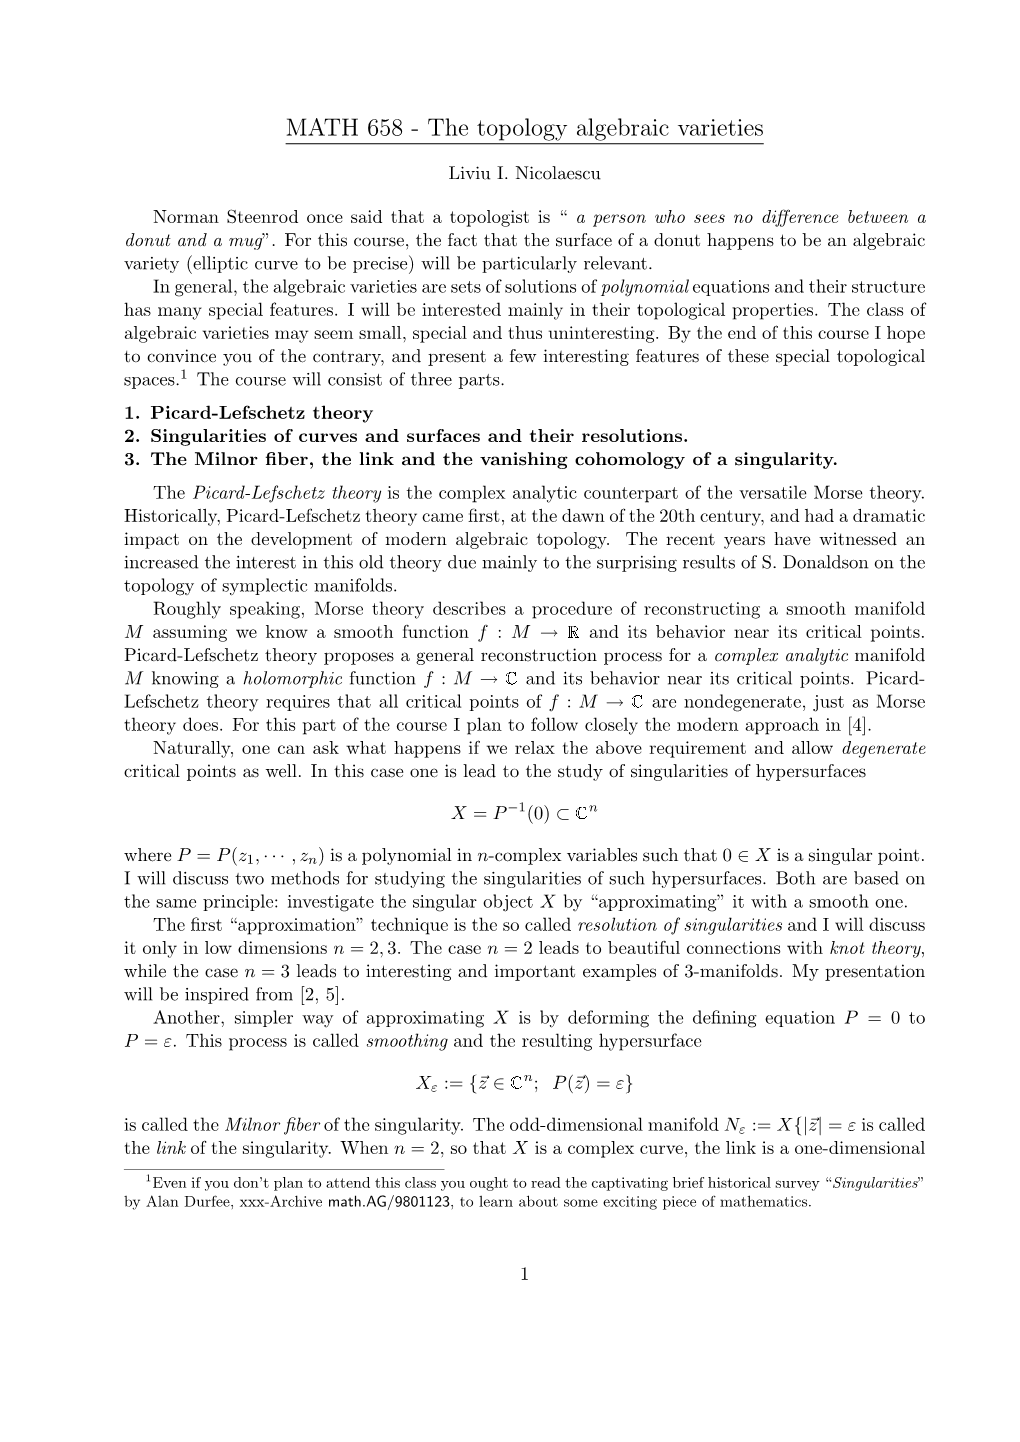 MATH 658 - the Topology Algebraic Varieties